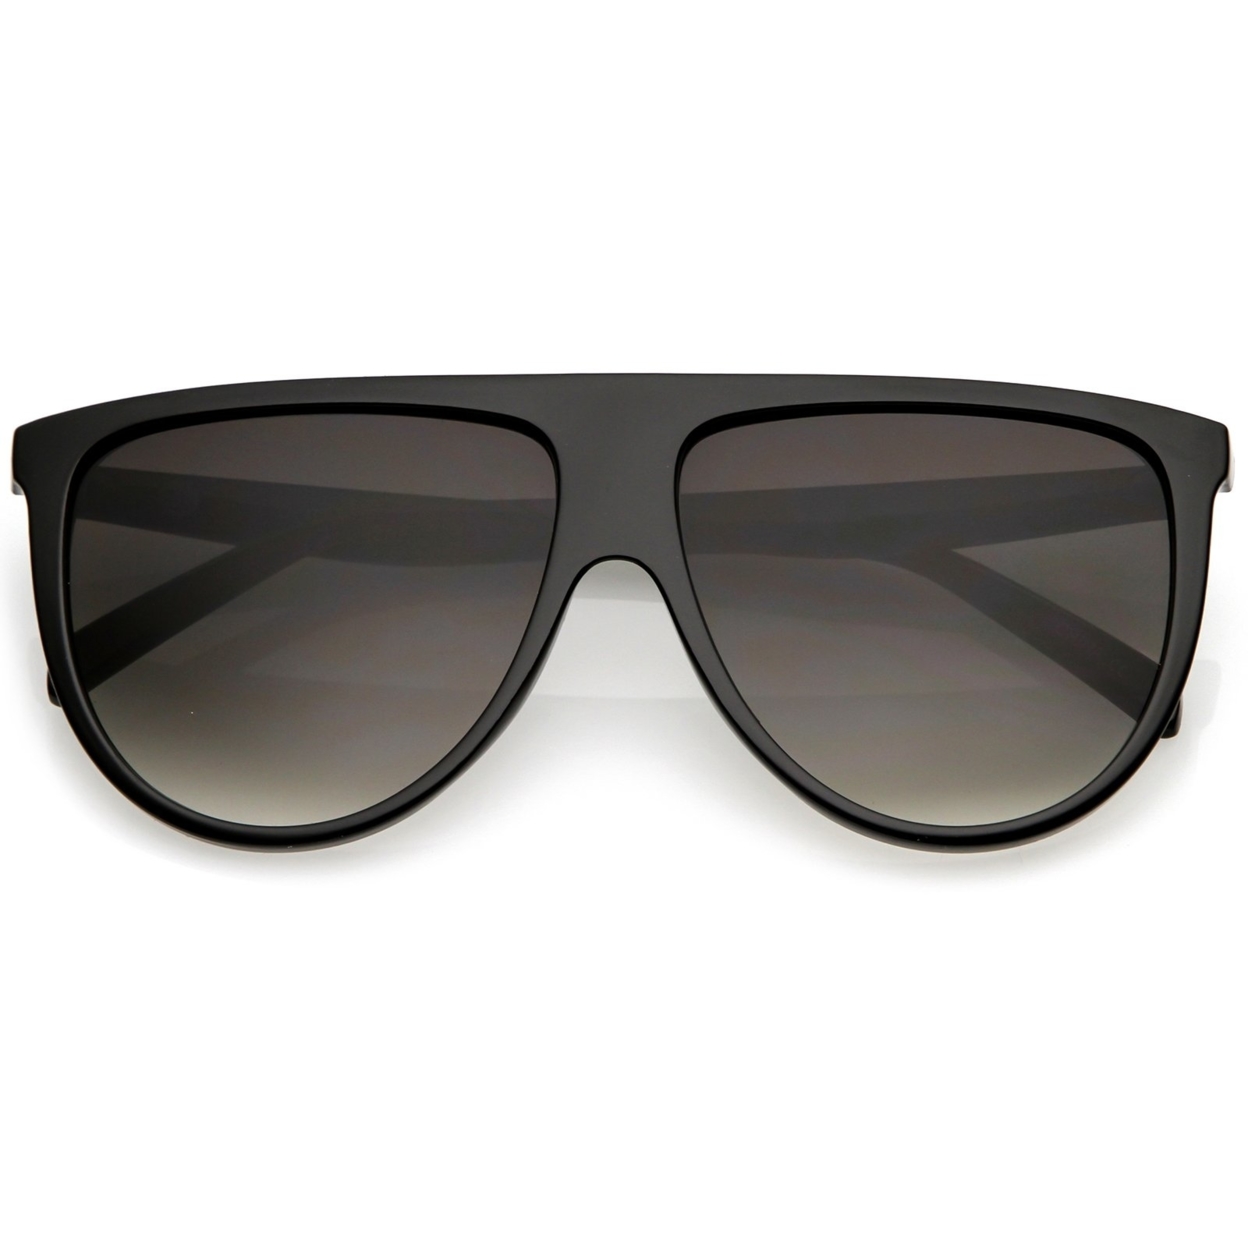 Modern Oversize Flat Top Aviator Sunglasses With Neutral Color Flat Lens 59mm - Tortoise Blue / Lavender